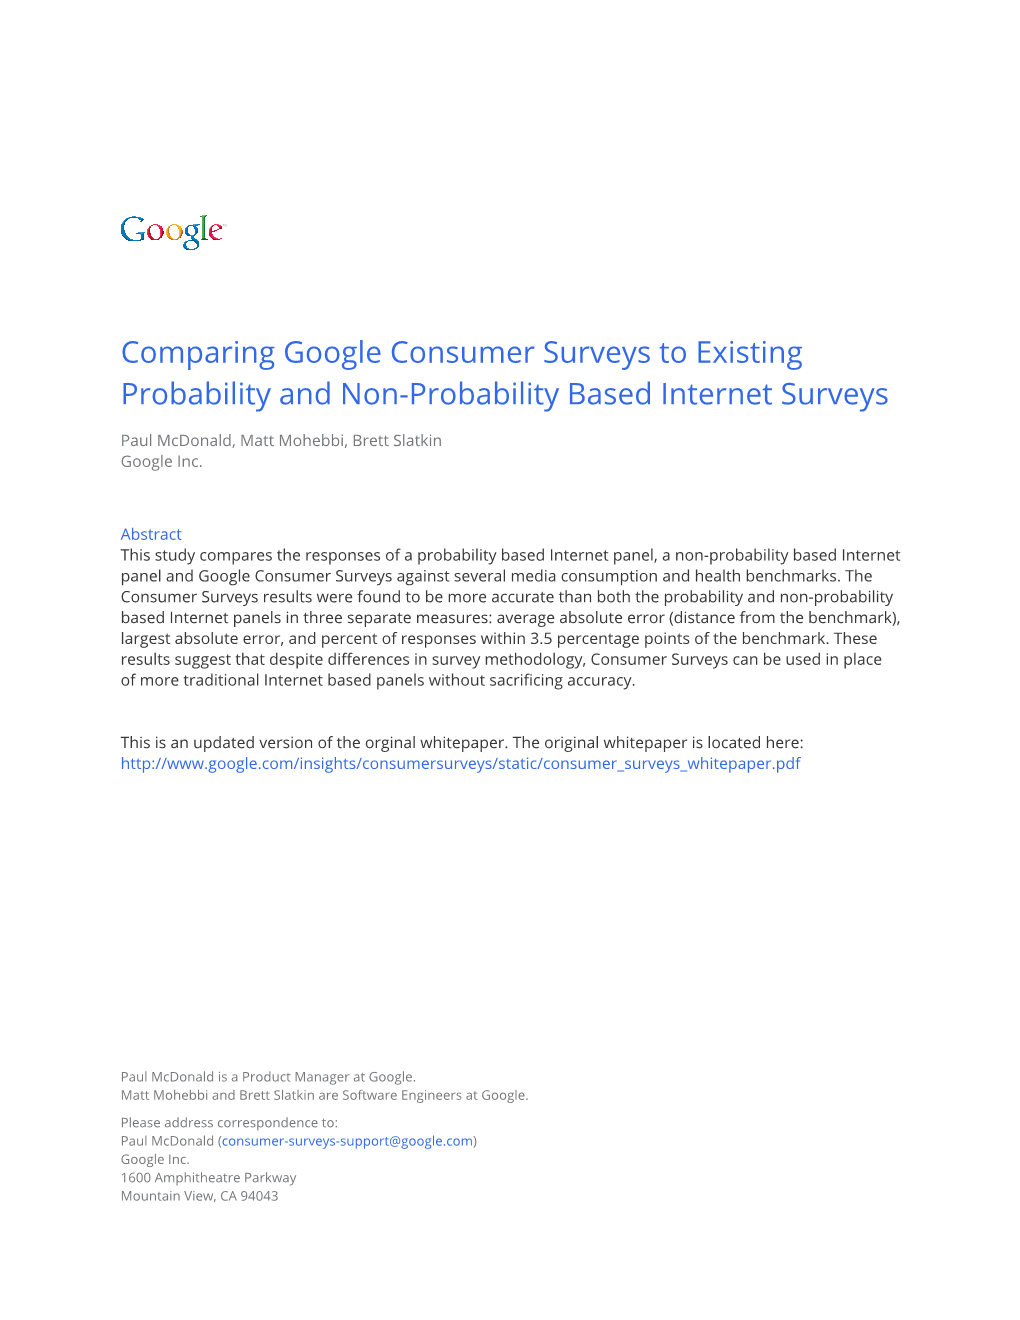 Comparing Google Consumer Surveys to Existing Probability and Non-Probability Based Internet Surveys